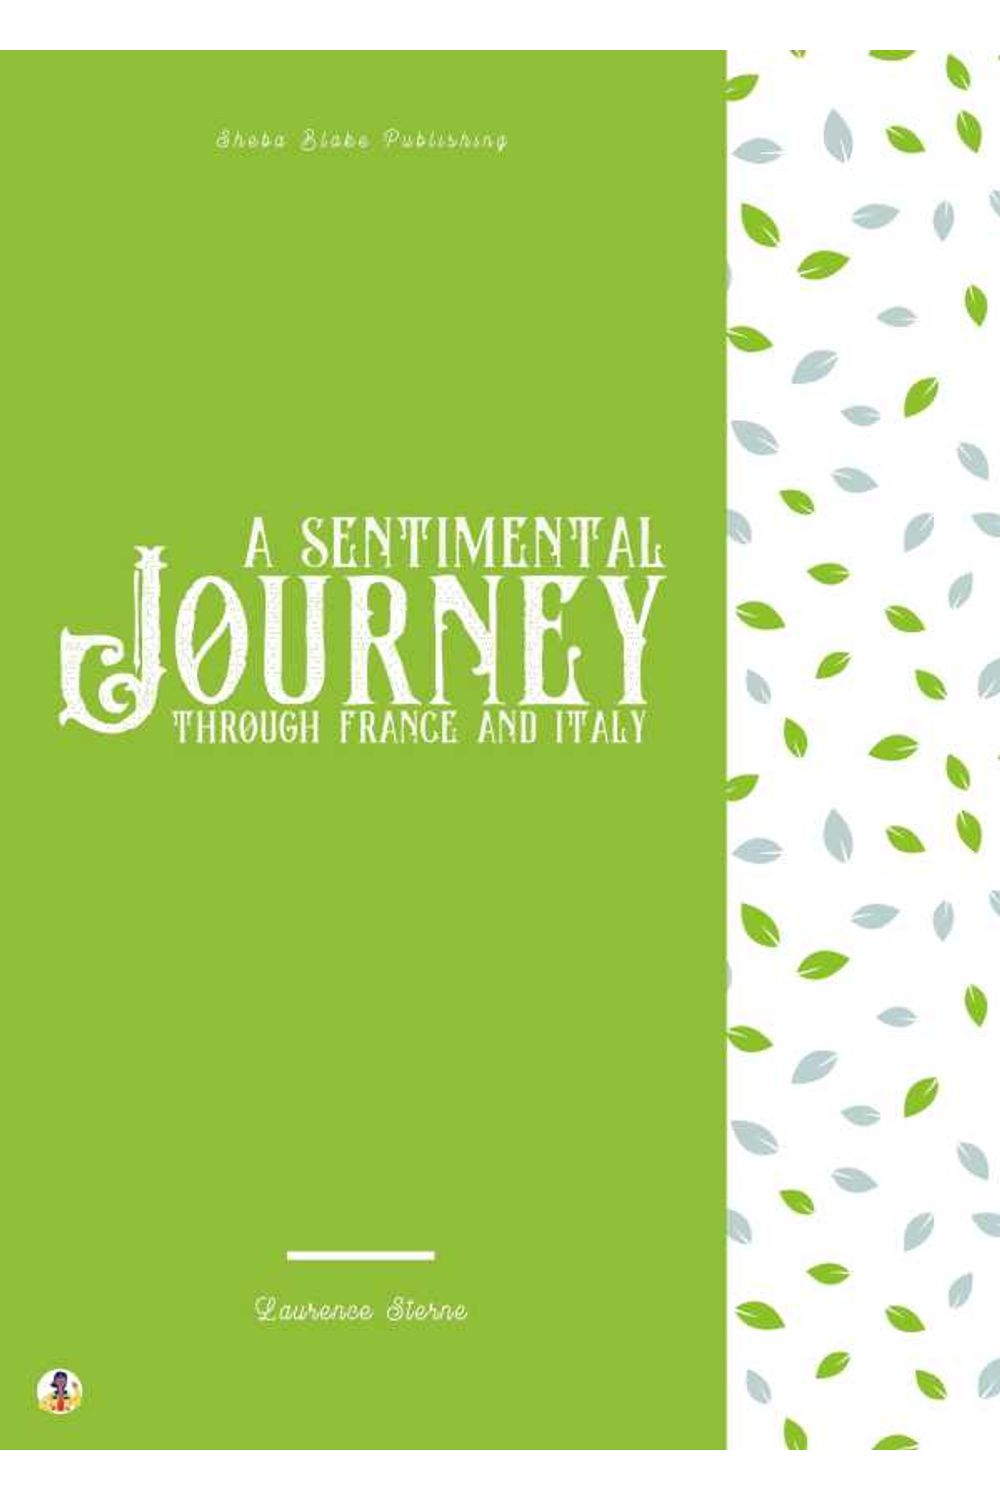 bw-a-sentimental-journey-through-france-and-italy-sheba-blake-publishing-9783966107525